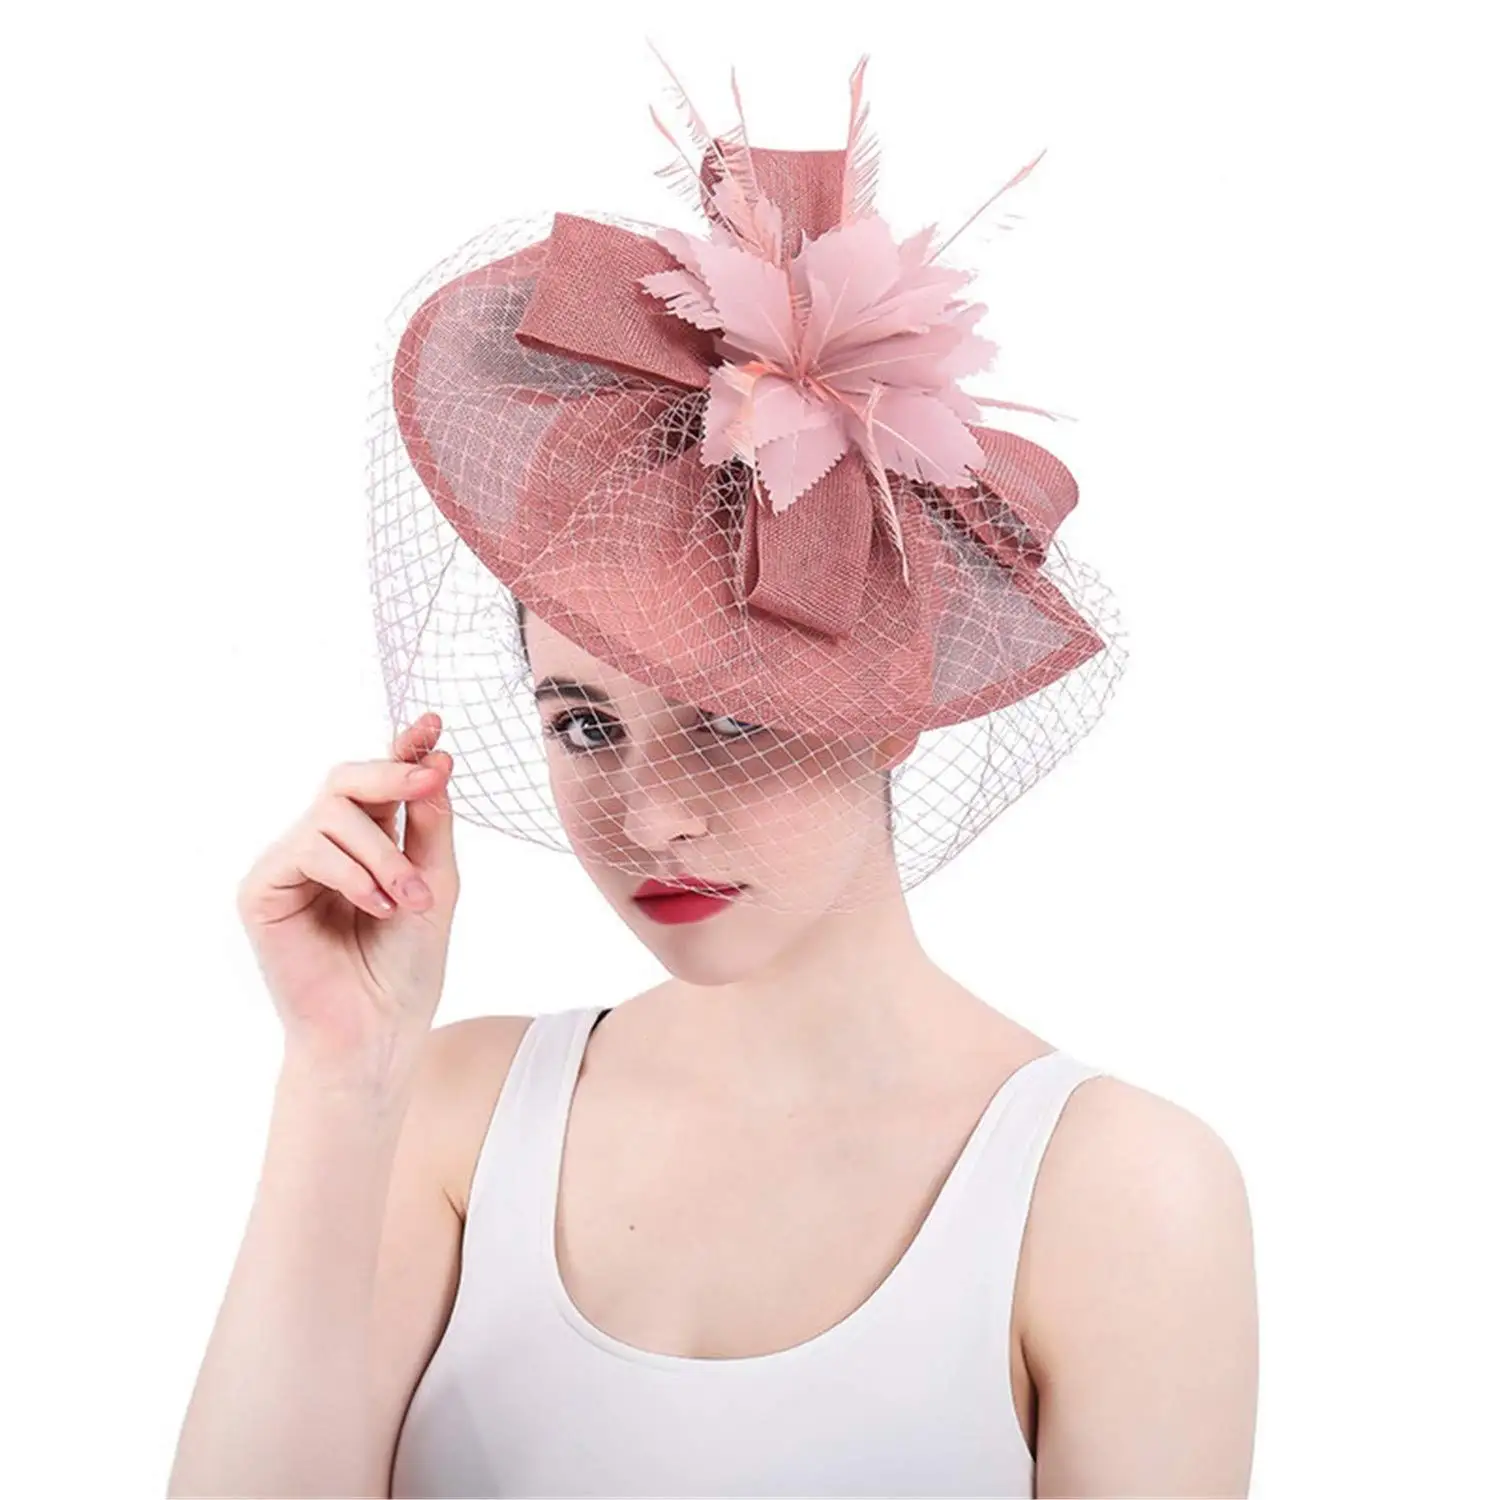 Cheap Bridal Hats Uk Find Bridal Hats Uk Deals On Line At Alibaba Com